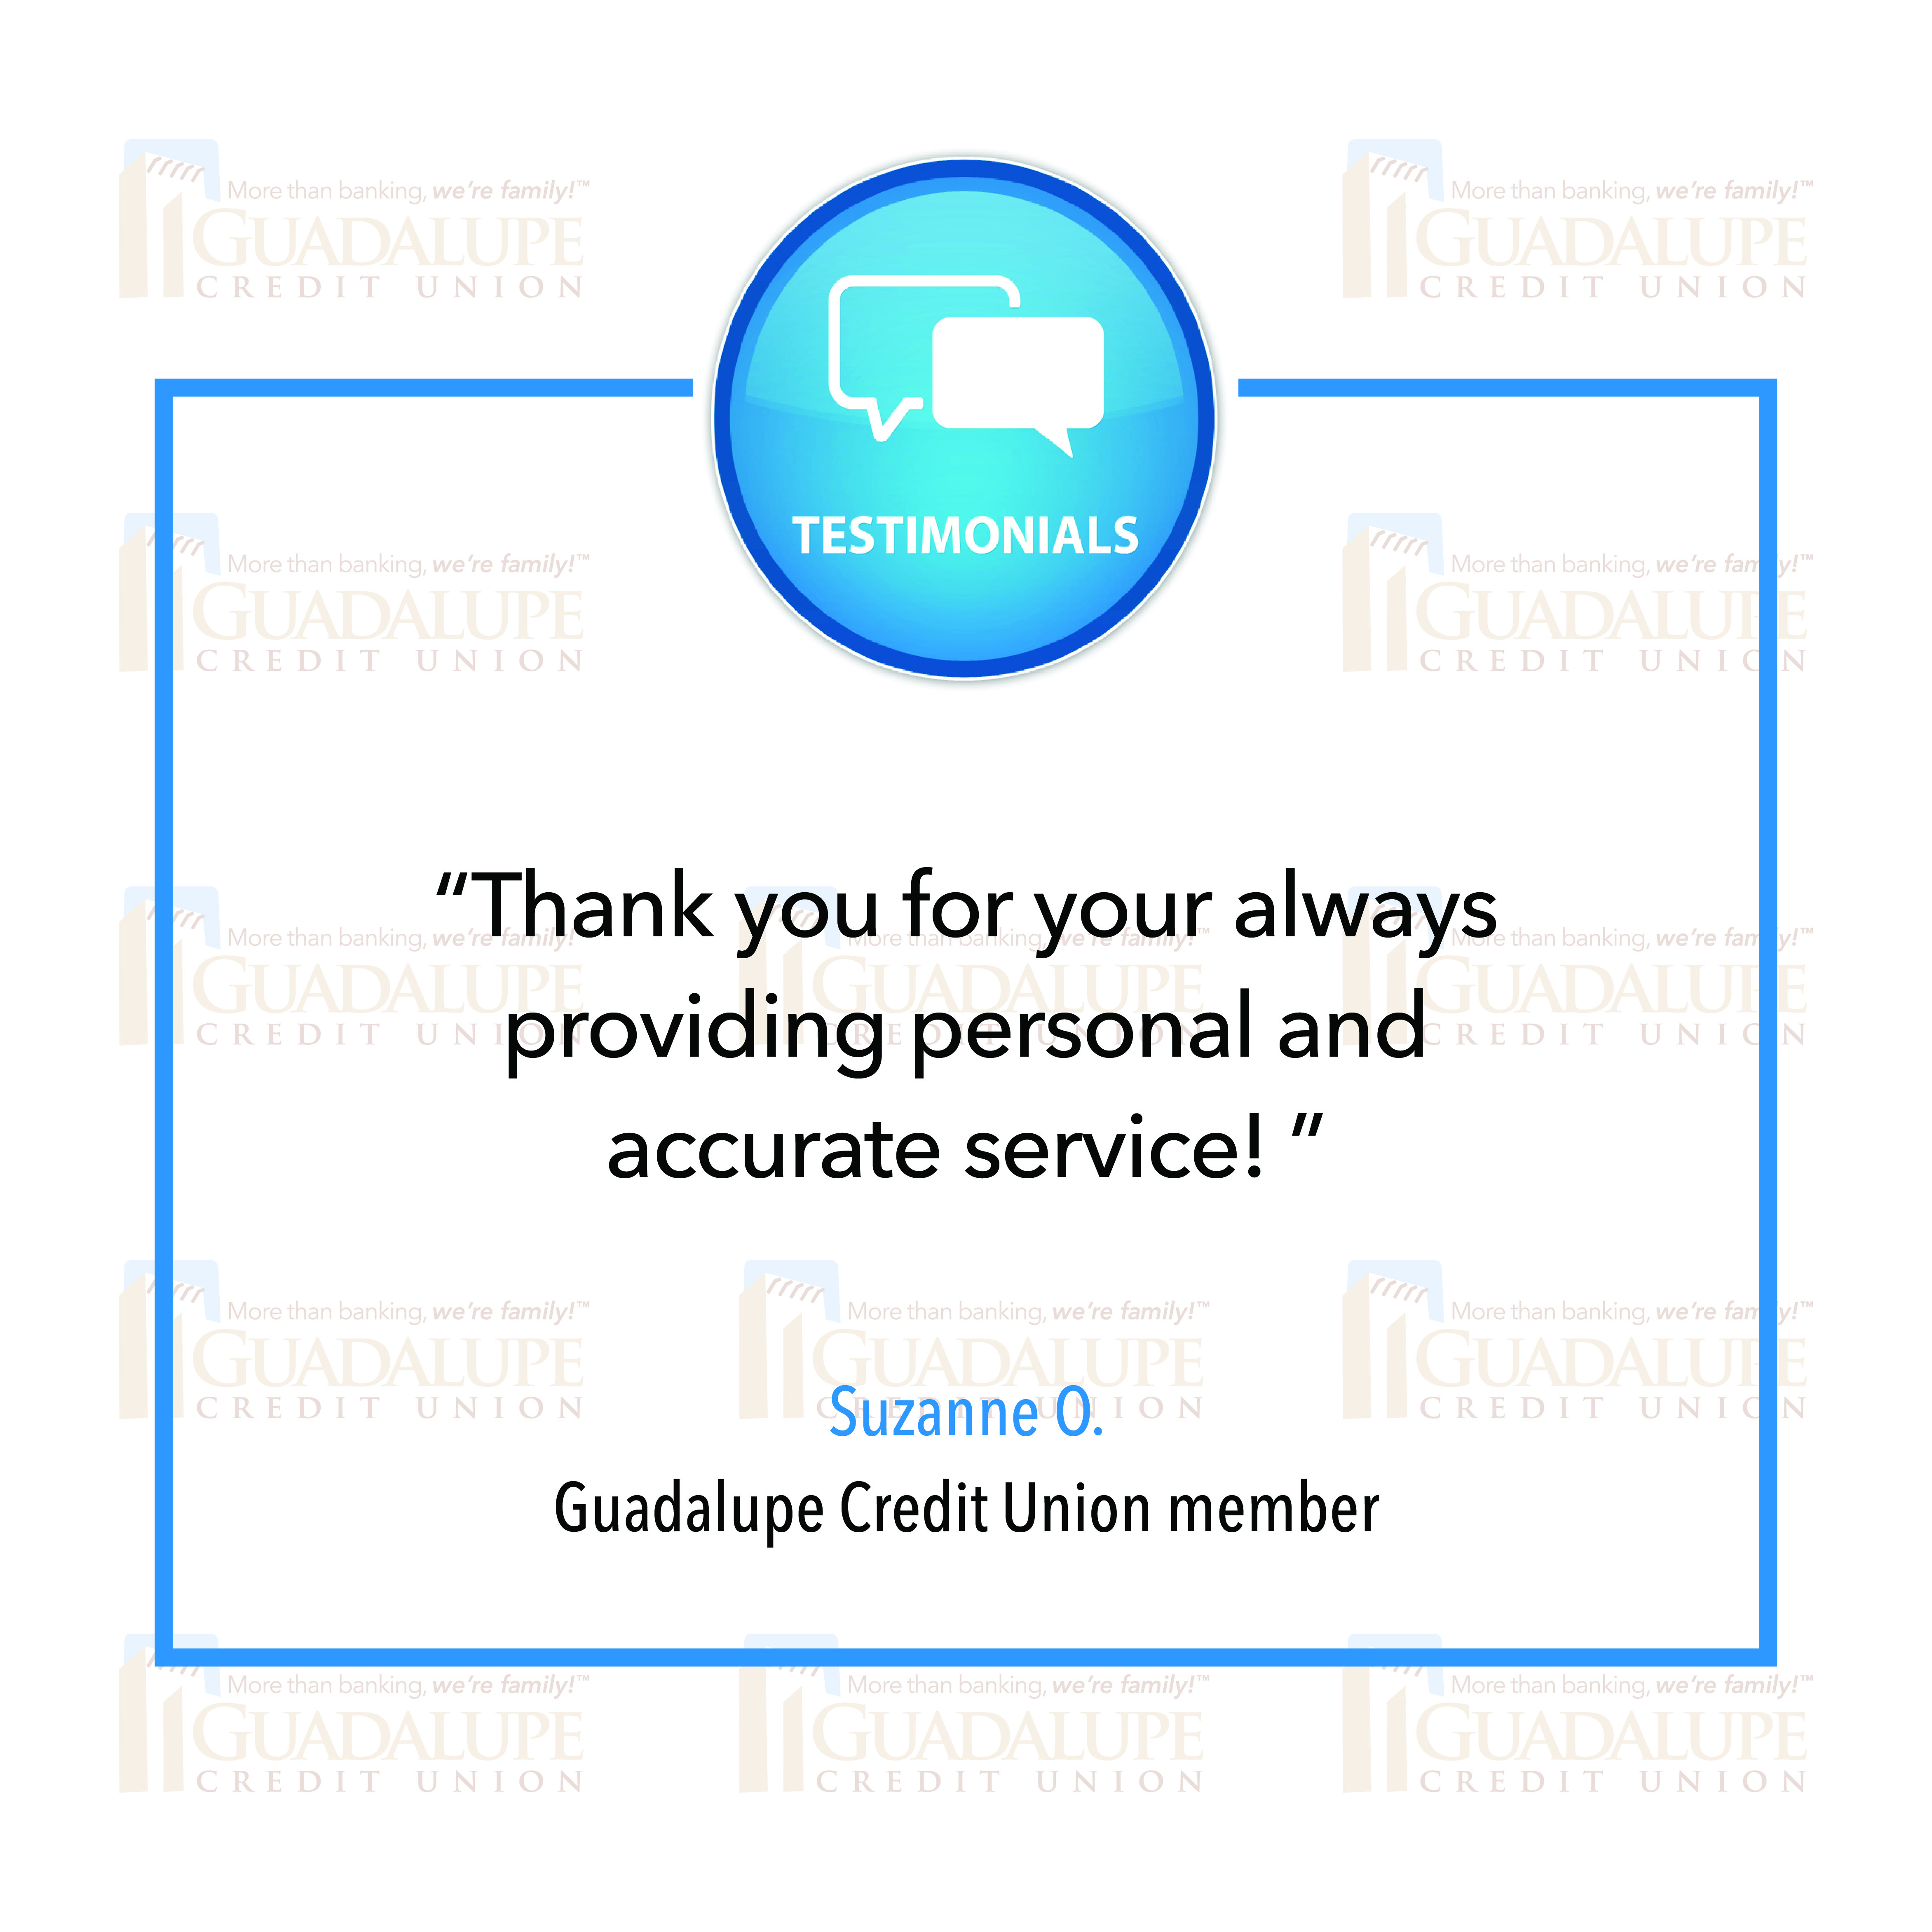 GCU Testimonial - "Customer service is exceptional. GCU has helped me make my dreams come true."